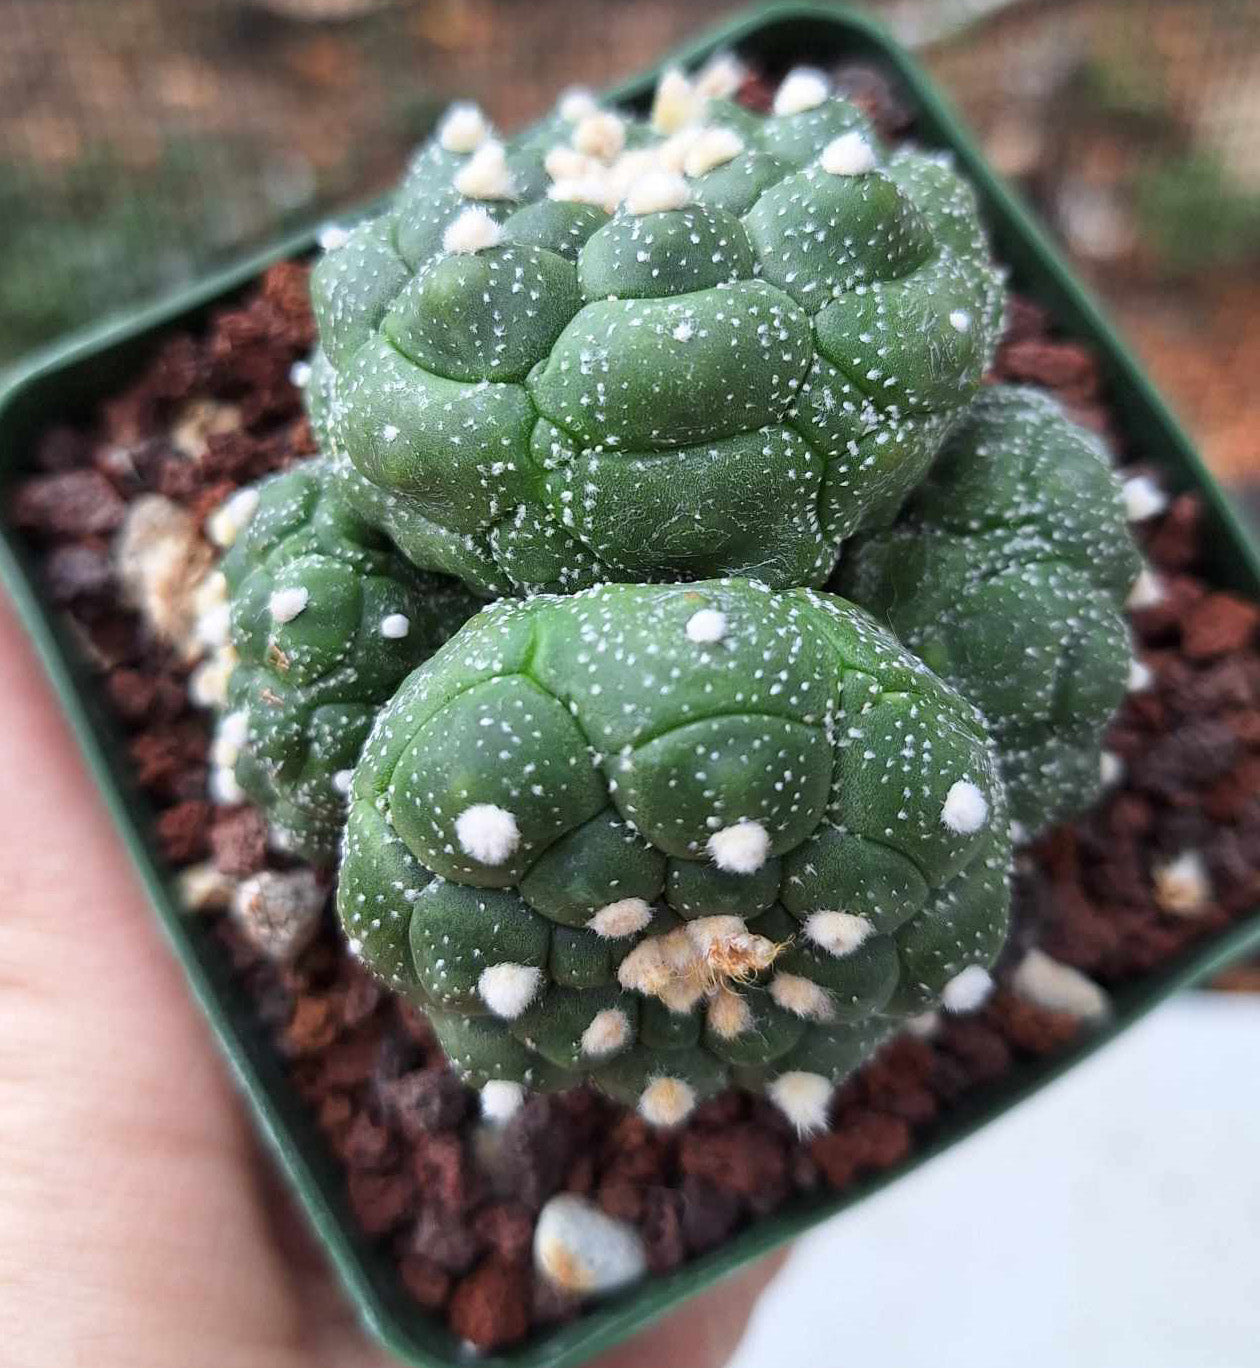 Astrophytum asterias Kikko 4 Headed Live Cactus in 4 Inch - Exact Plant